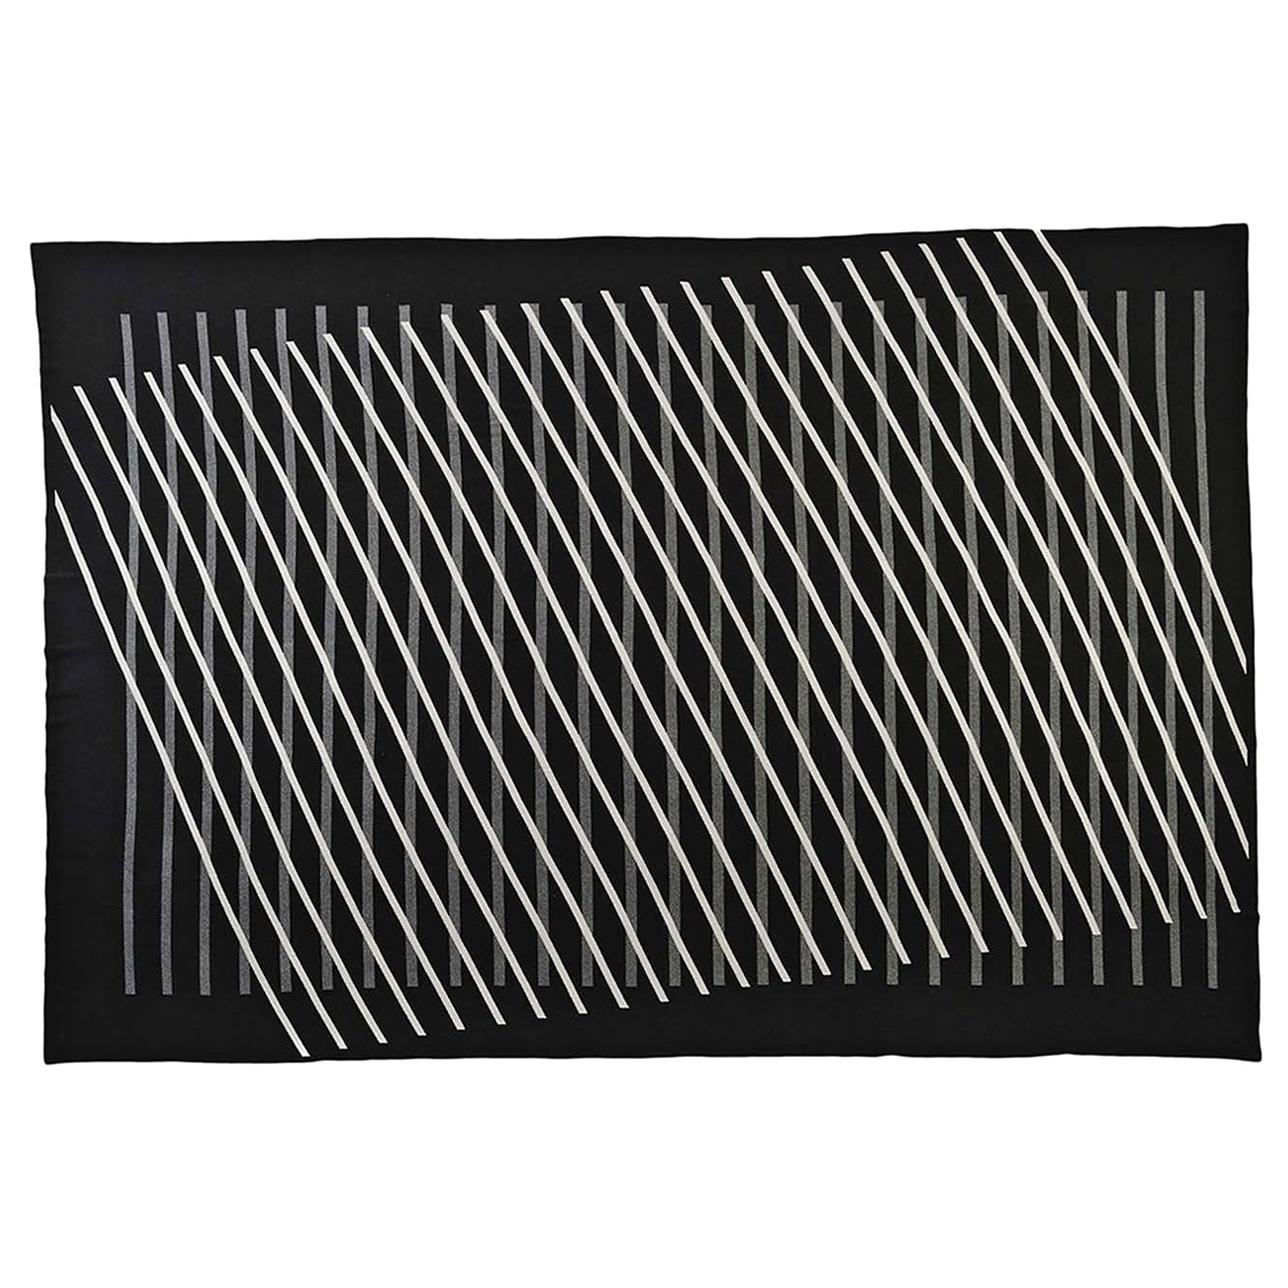 Optical Line Blanket by Roberta Licini